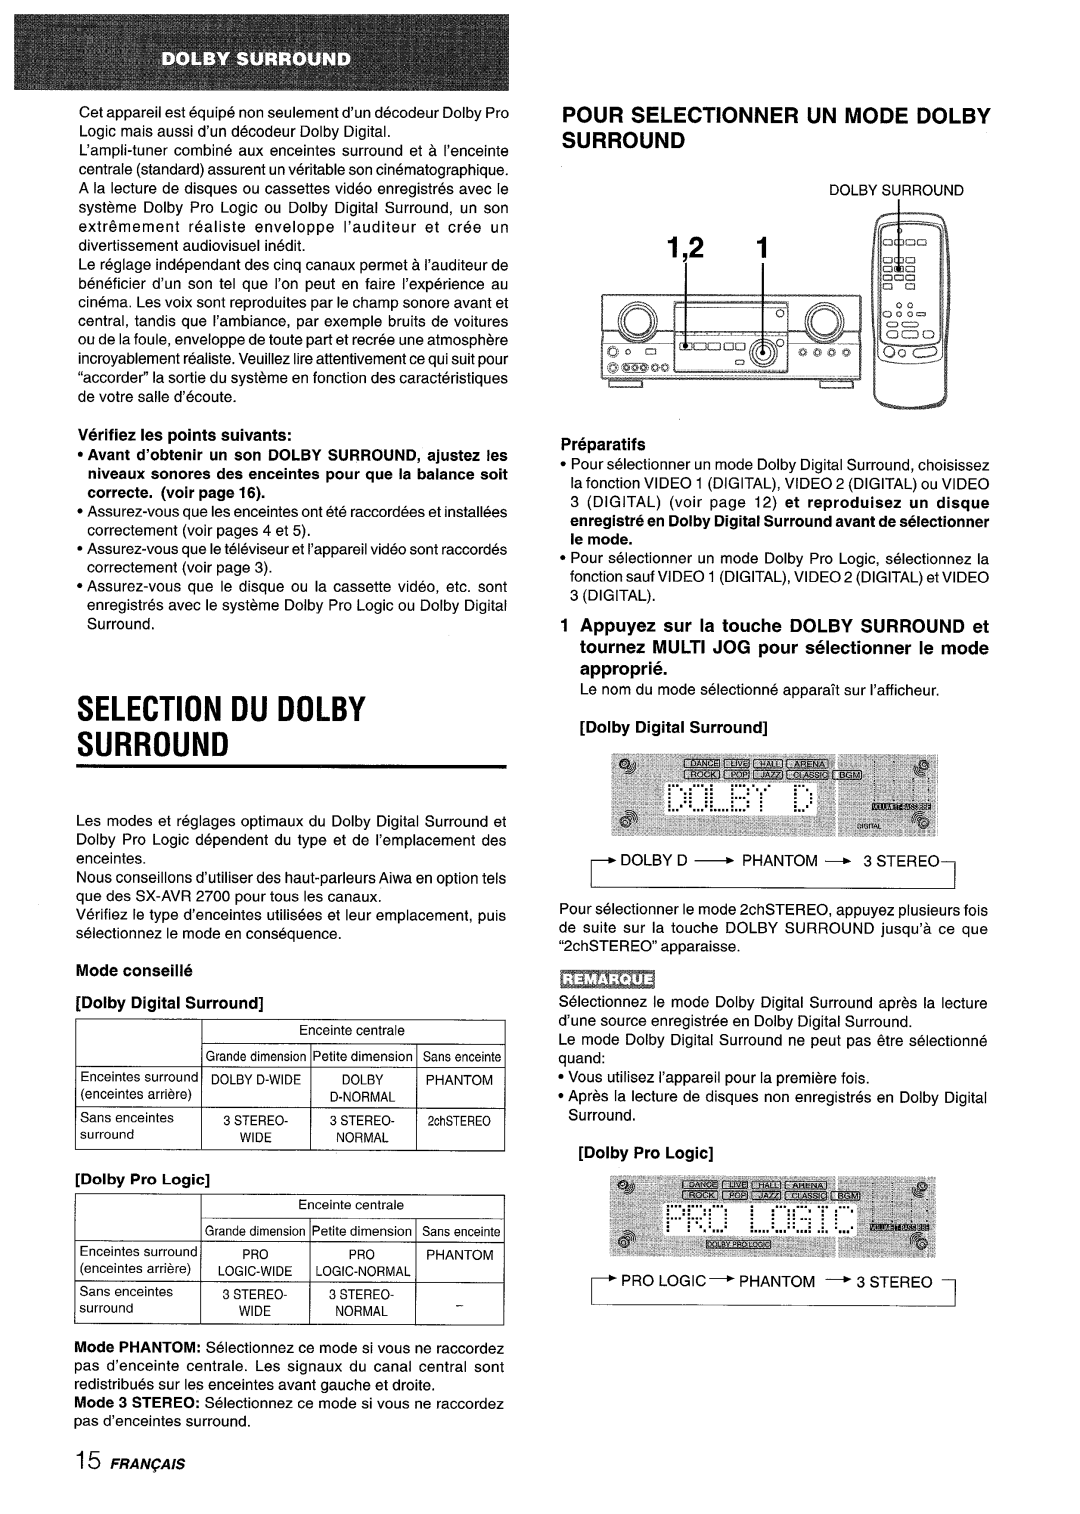 Sony AV-DV75 manual Selection Du Dolby Surround, Pour Selectionner Un Mode Dolby Surround, Verifiez Ies points suivants 